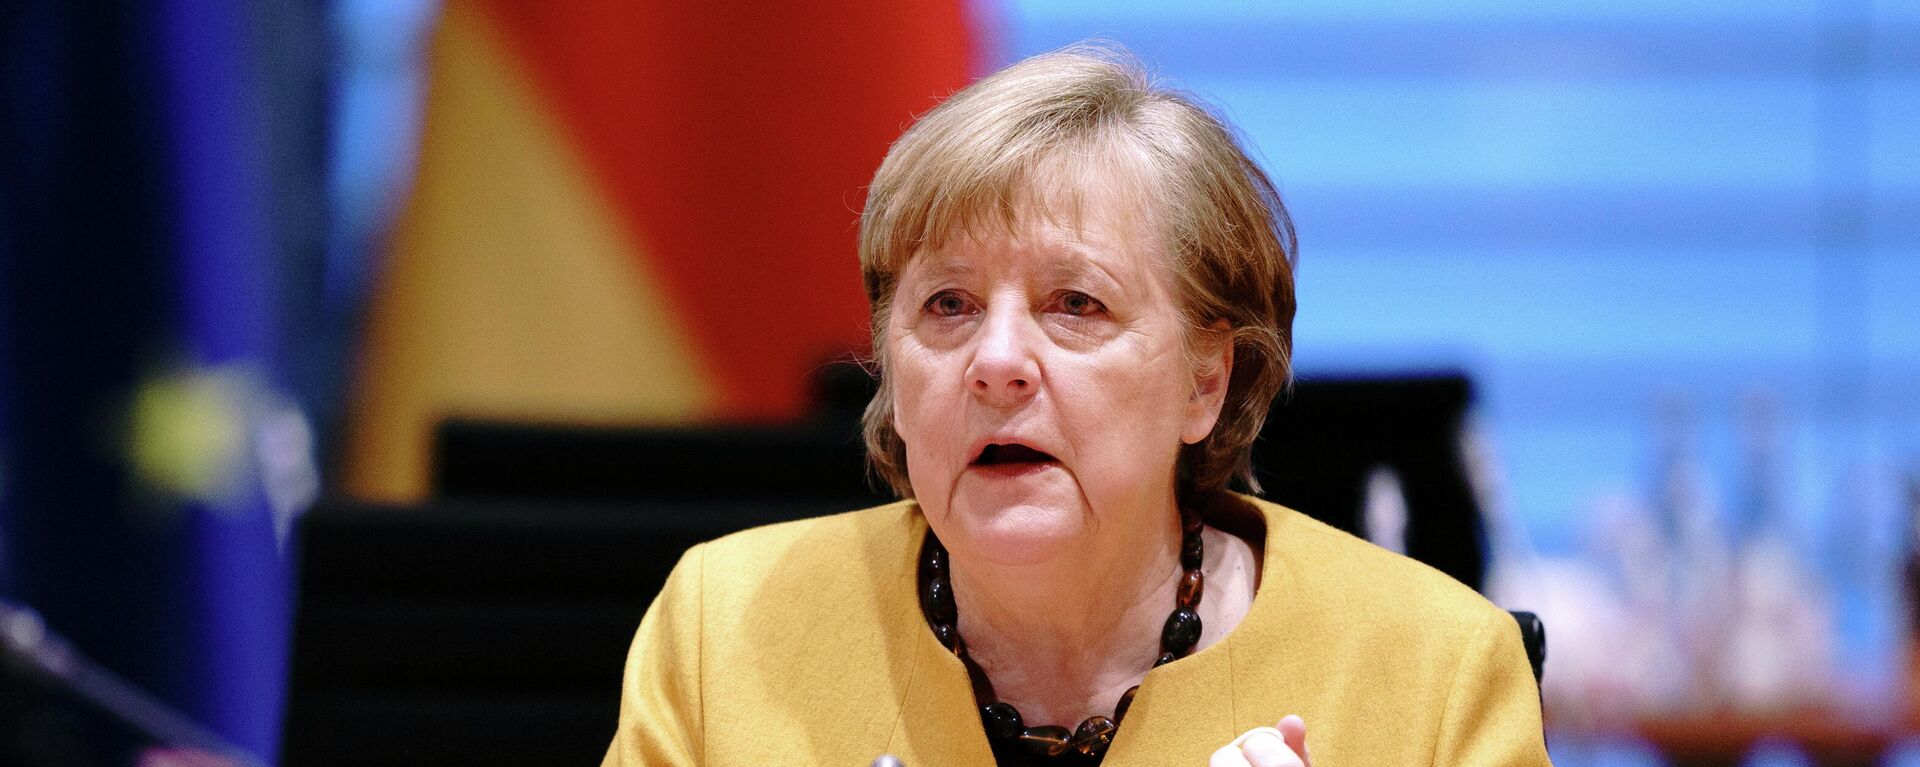 Angela Merkel, canciller alemana - Sputnik Mundo, 1920, 24.03.2021